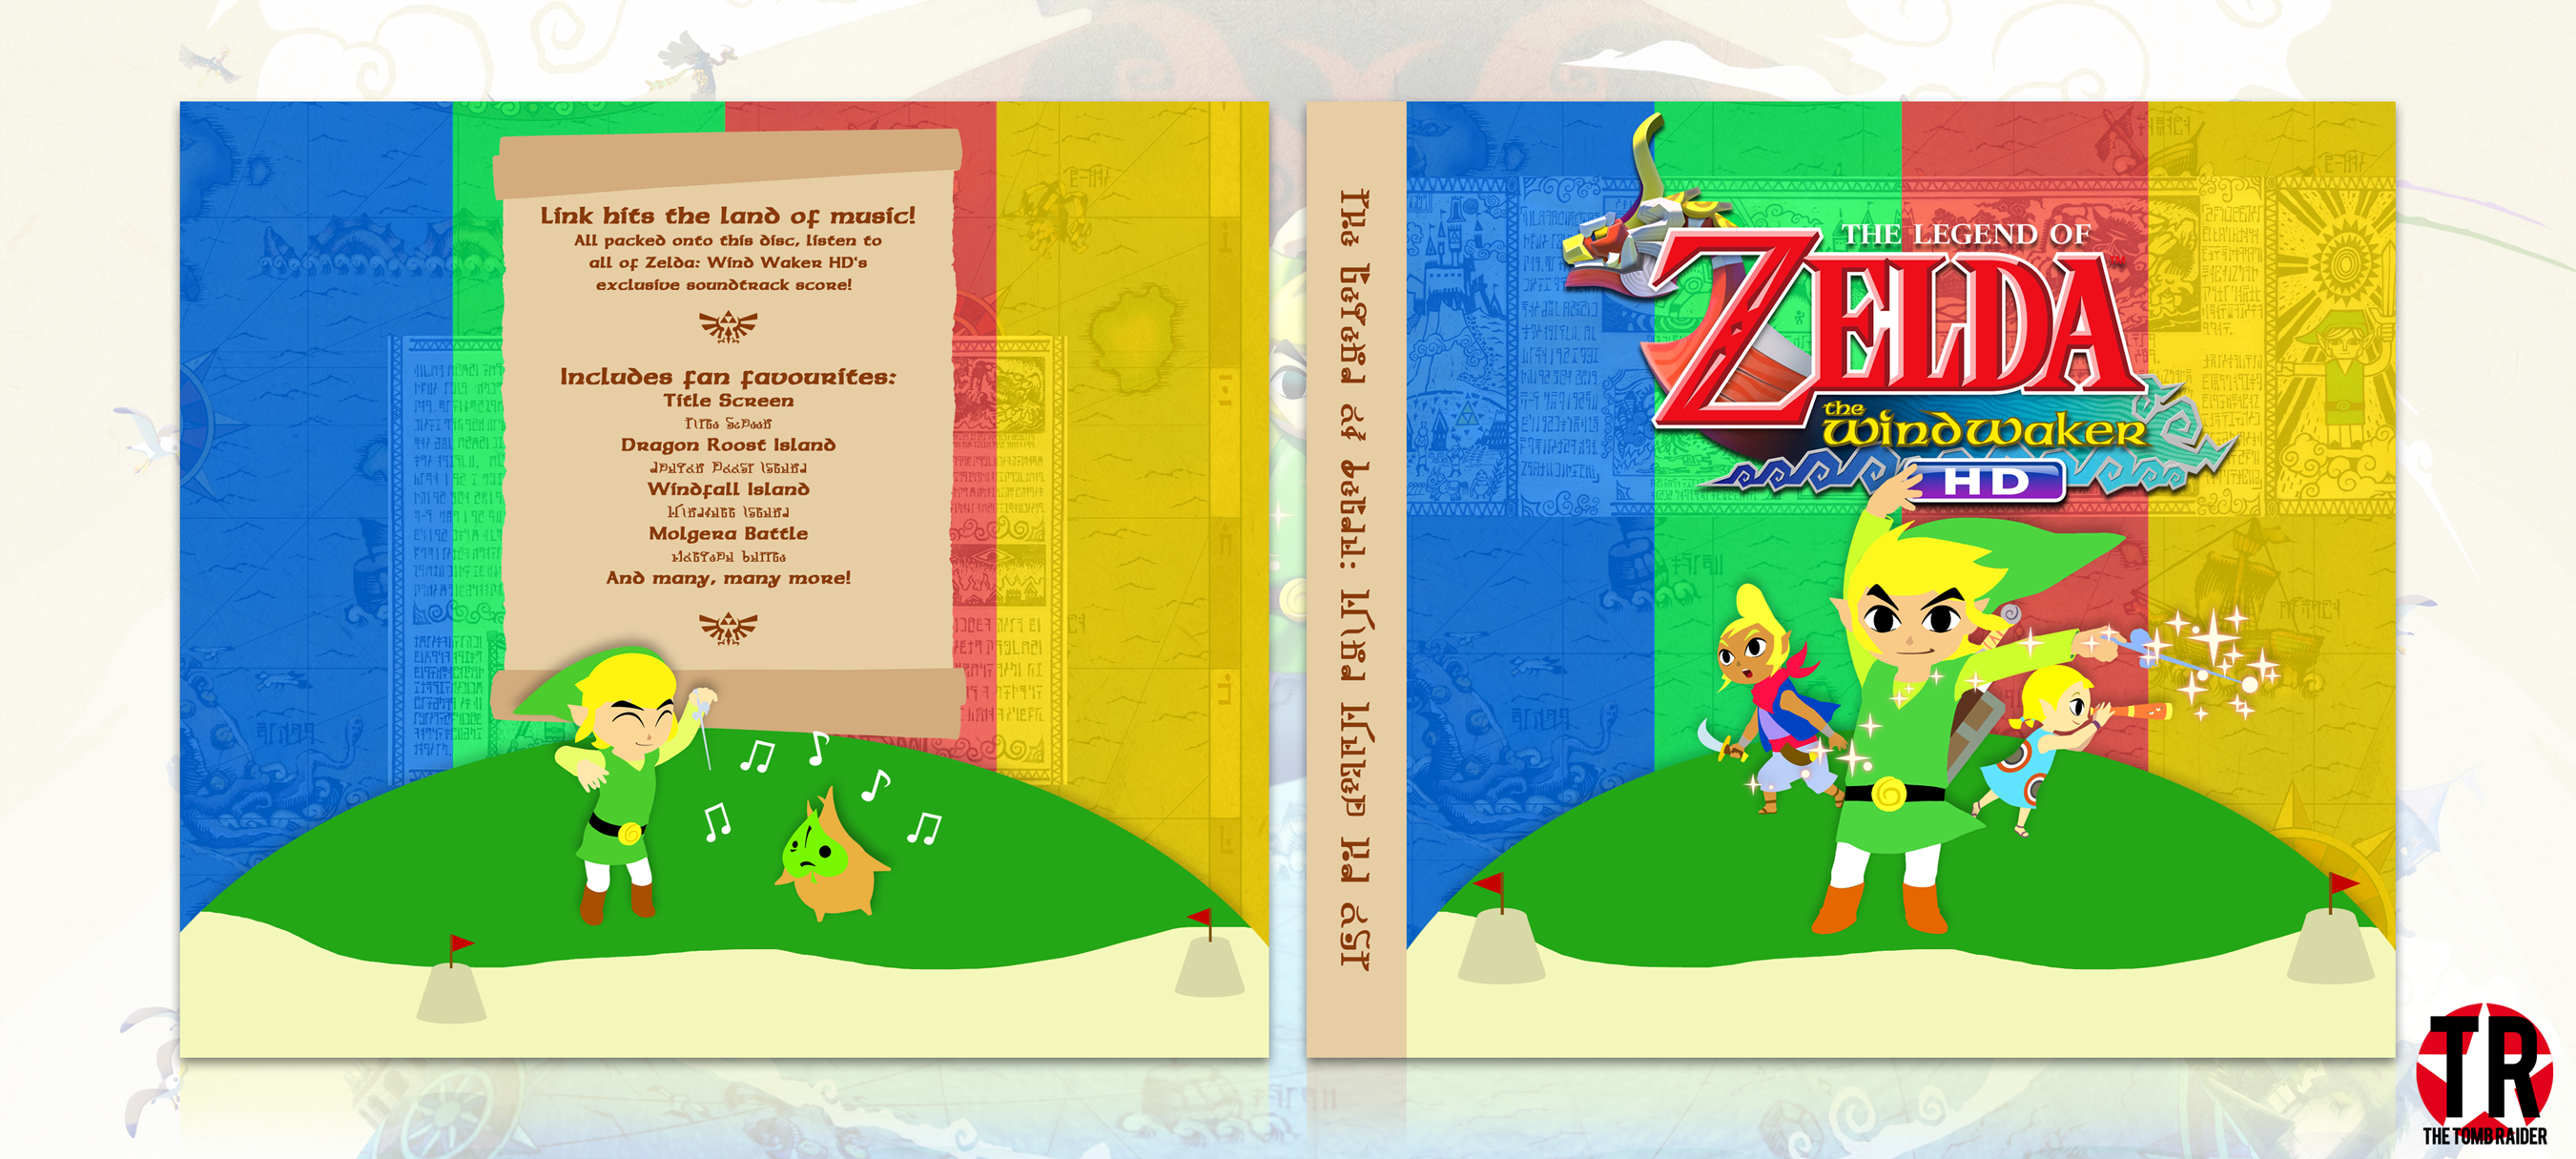 The Legend of Zelda: Wind Waker HD box cover